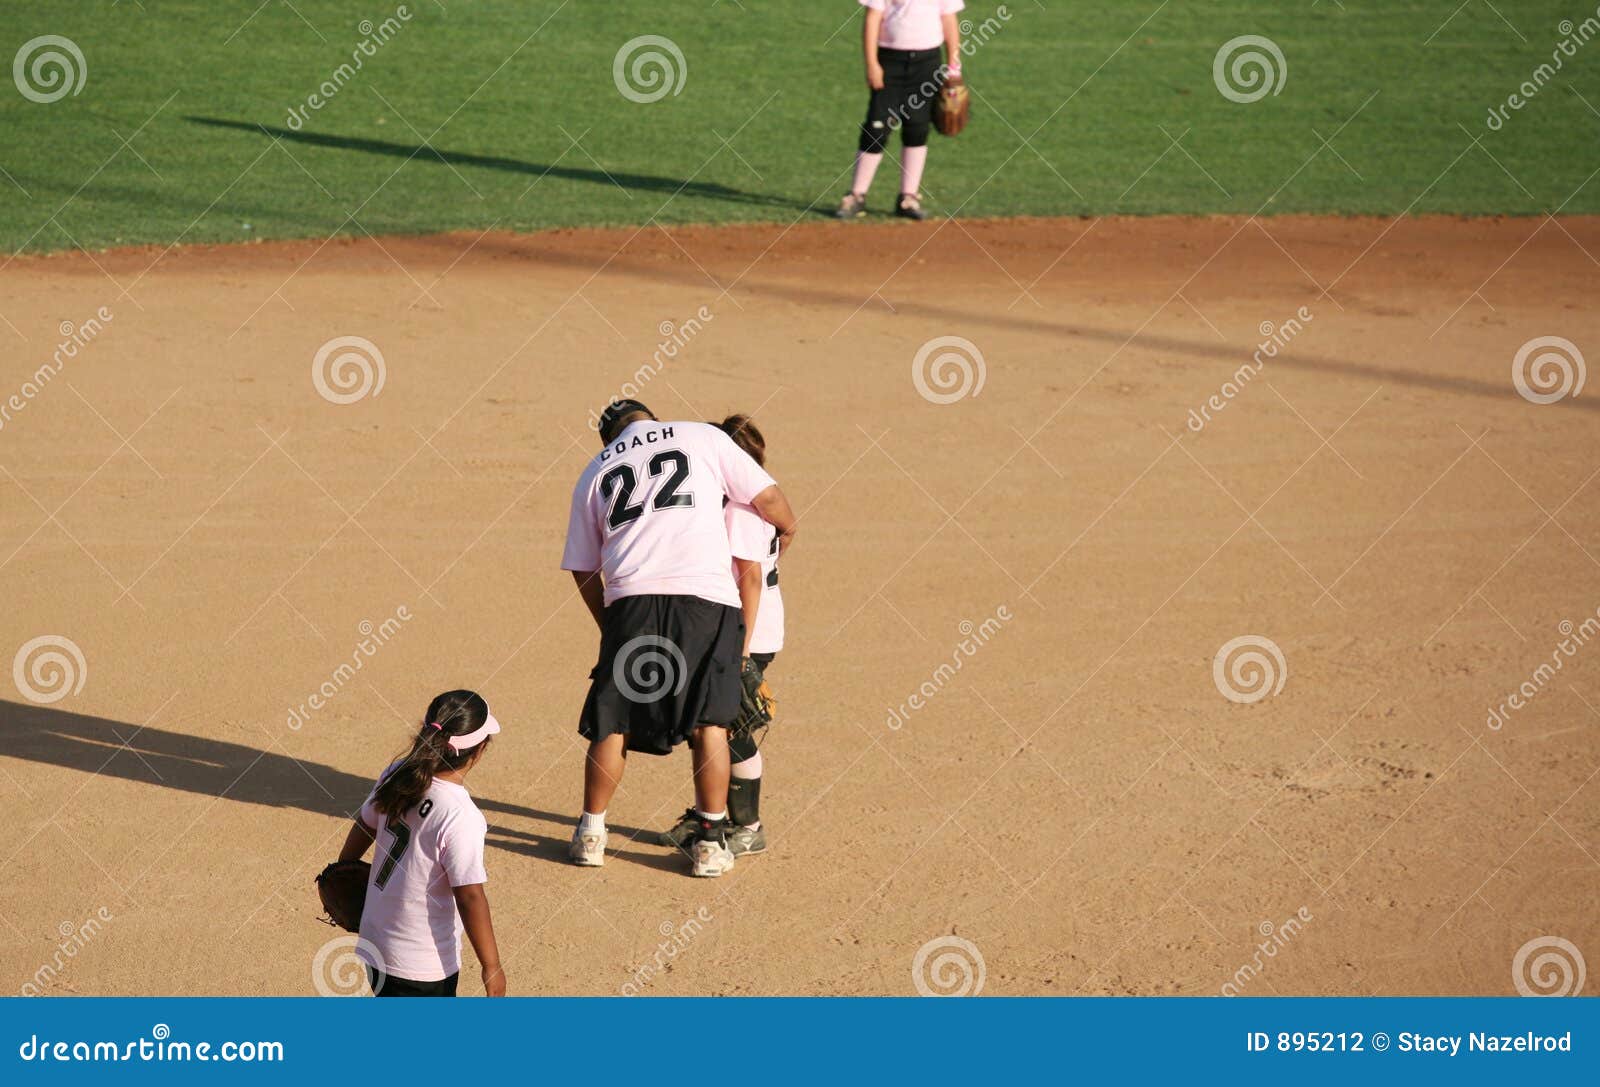 baseball coach helping a player